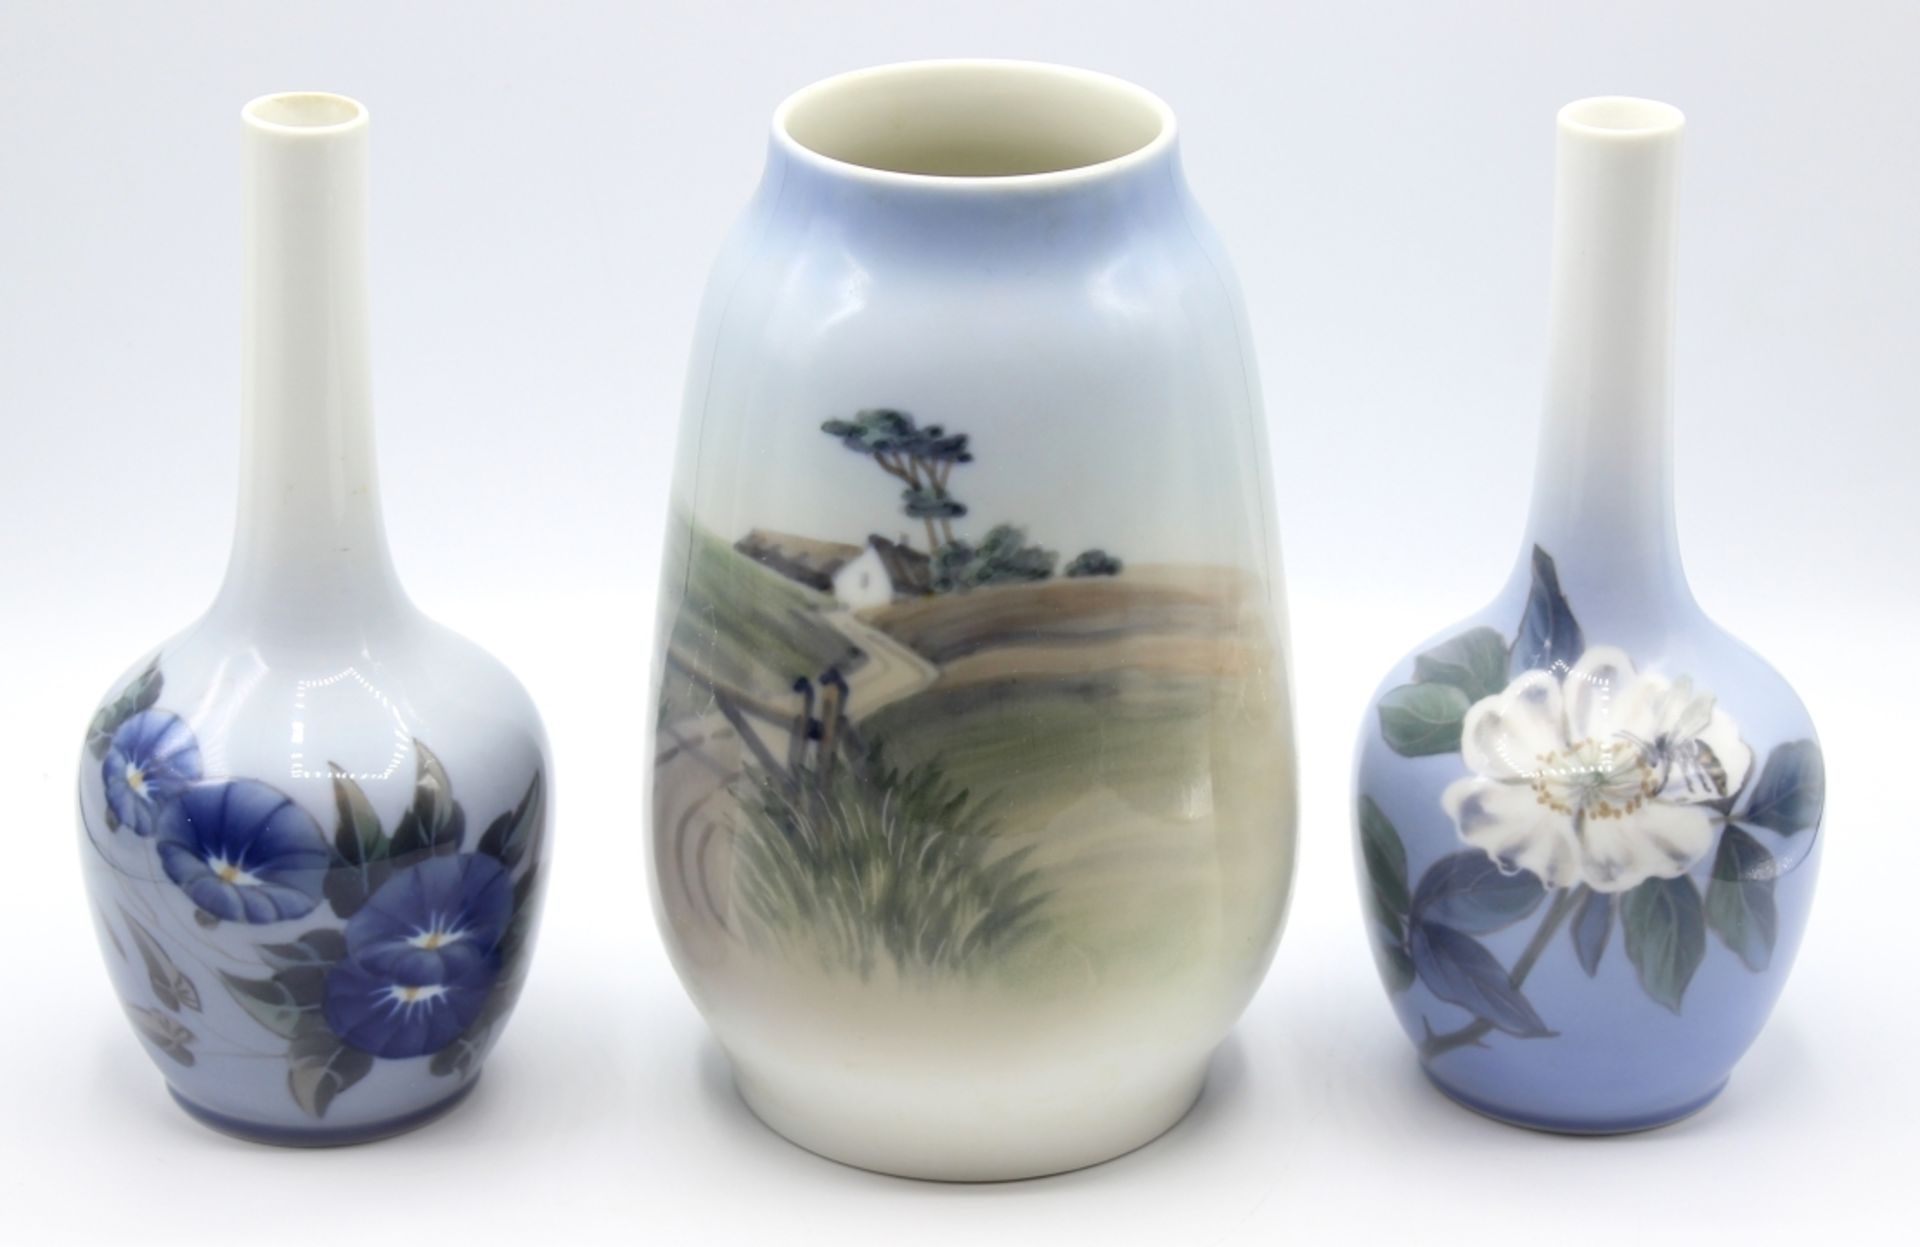 Drei Vasen - Marke Royal Copenhagen Denmark Porzellan bunt staffiert, Höhe ca. 20 cm, 3 Stück